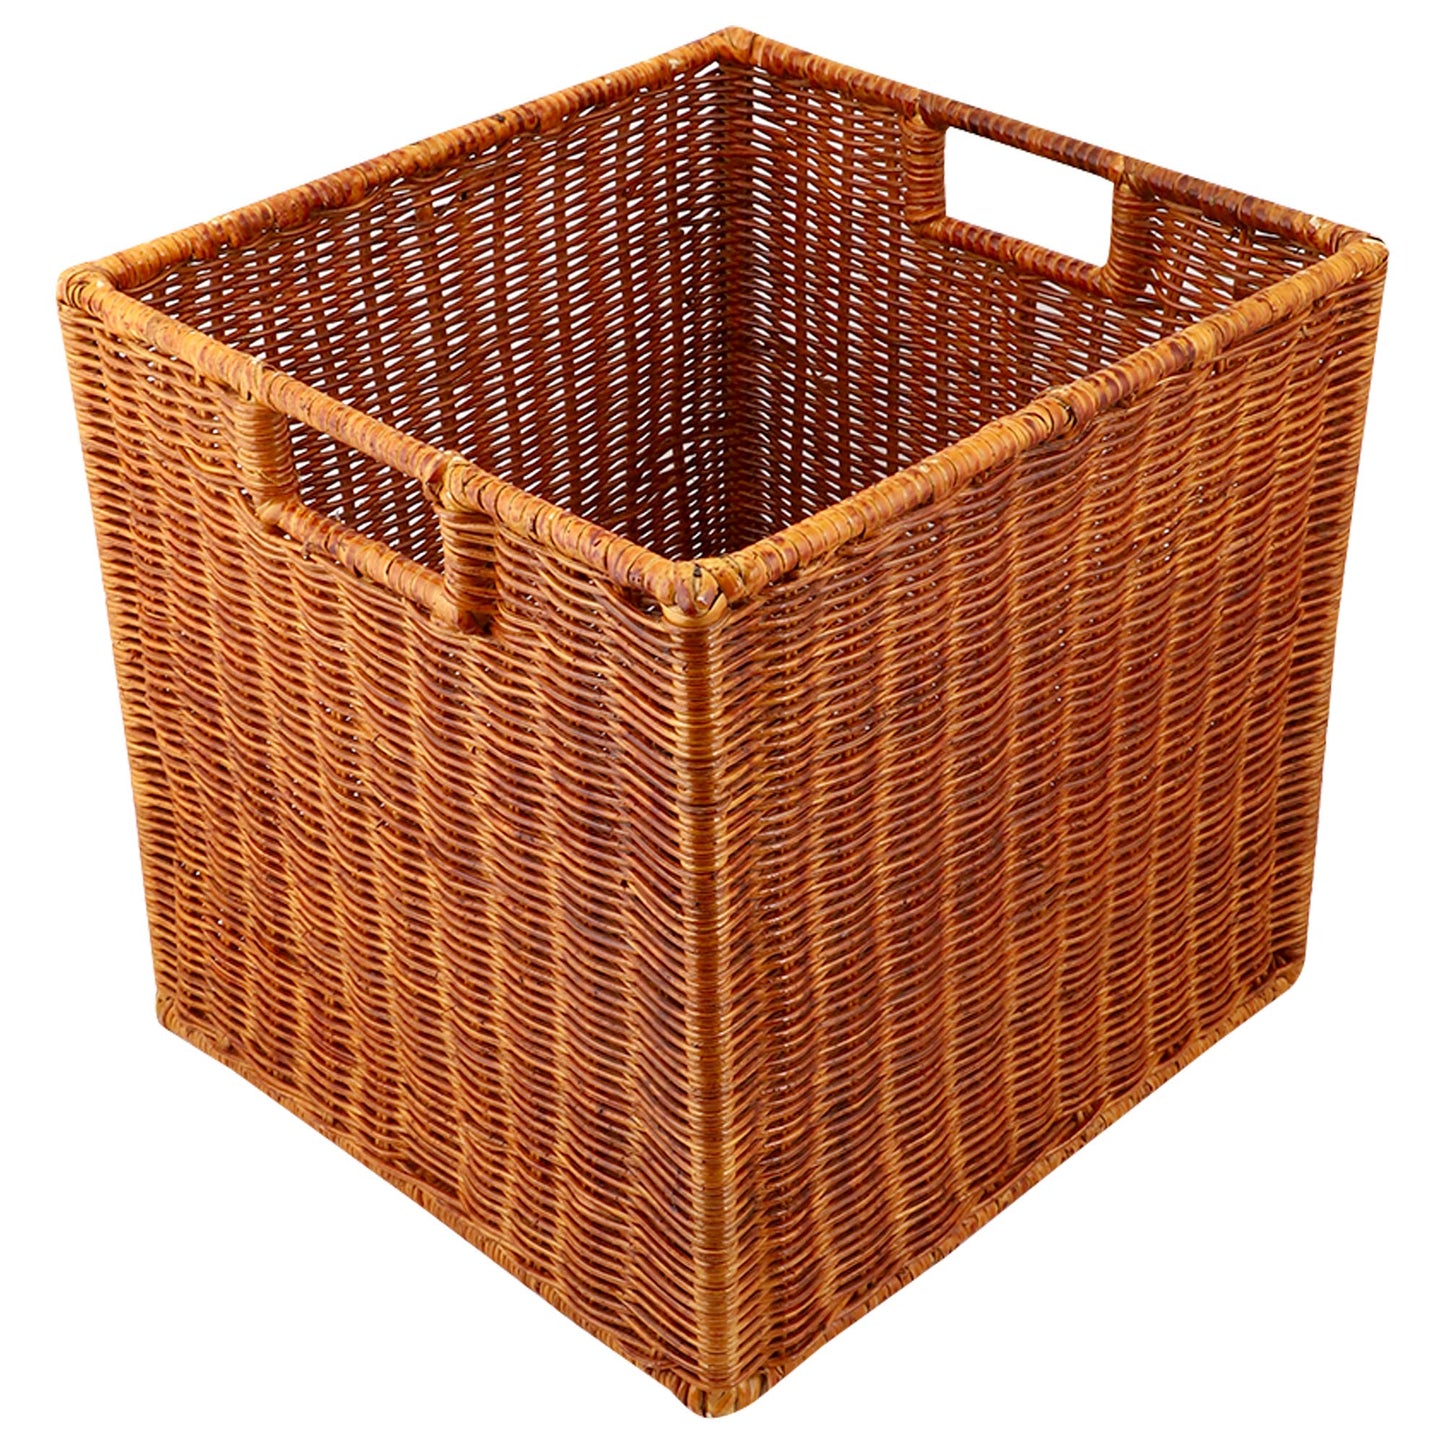 AKWAY Wicker wardrobe basket for storage, cloths, newspapers, photos or other memorabilia (12.5" W x 13.5" L x 12.5" H, Glossy Brown) - Akway